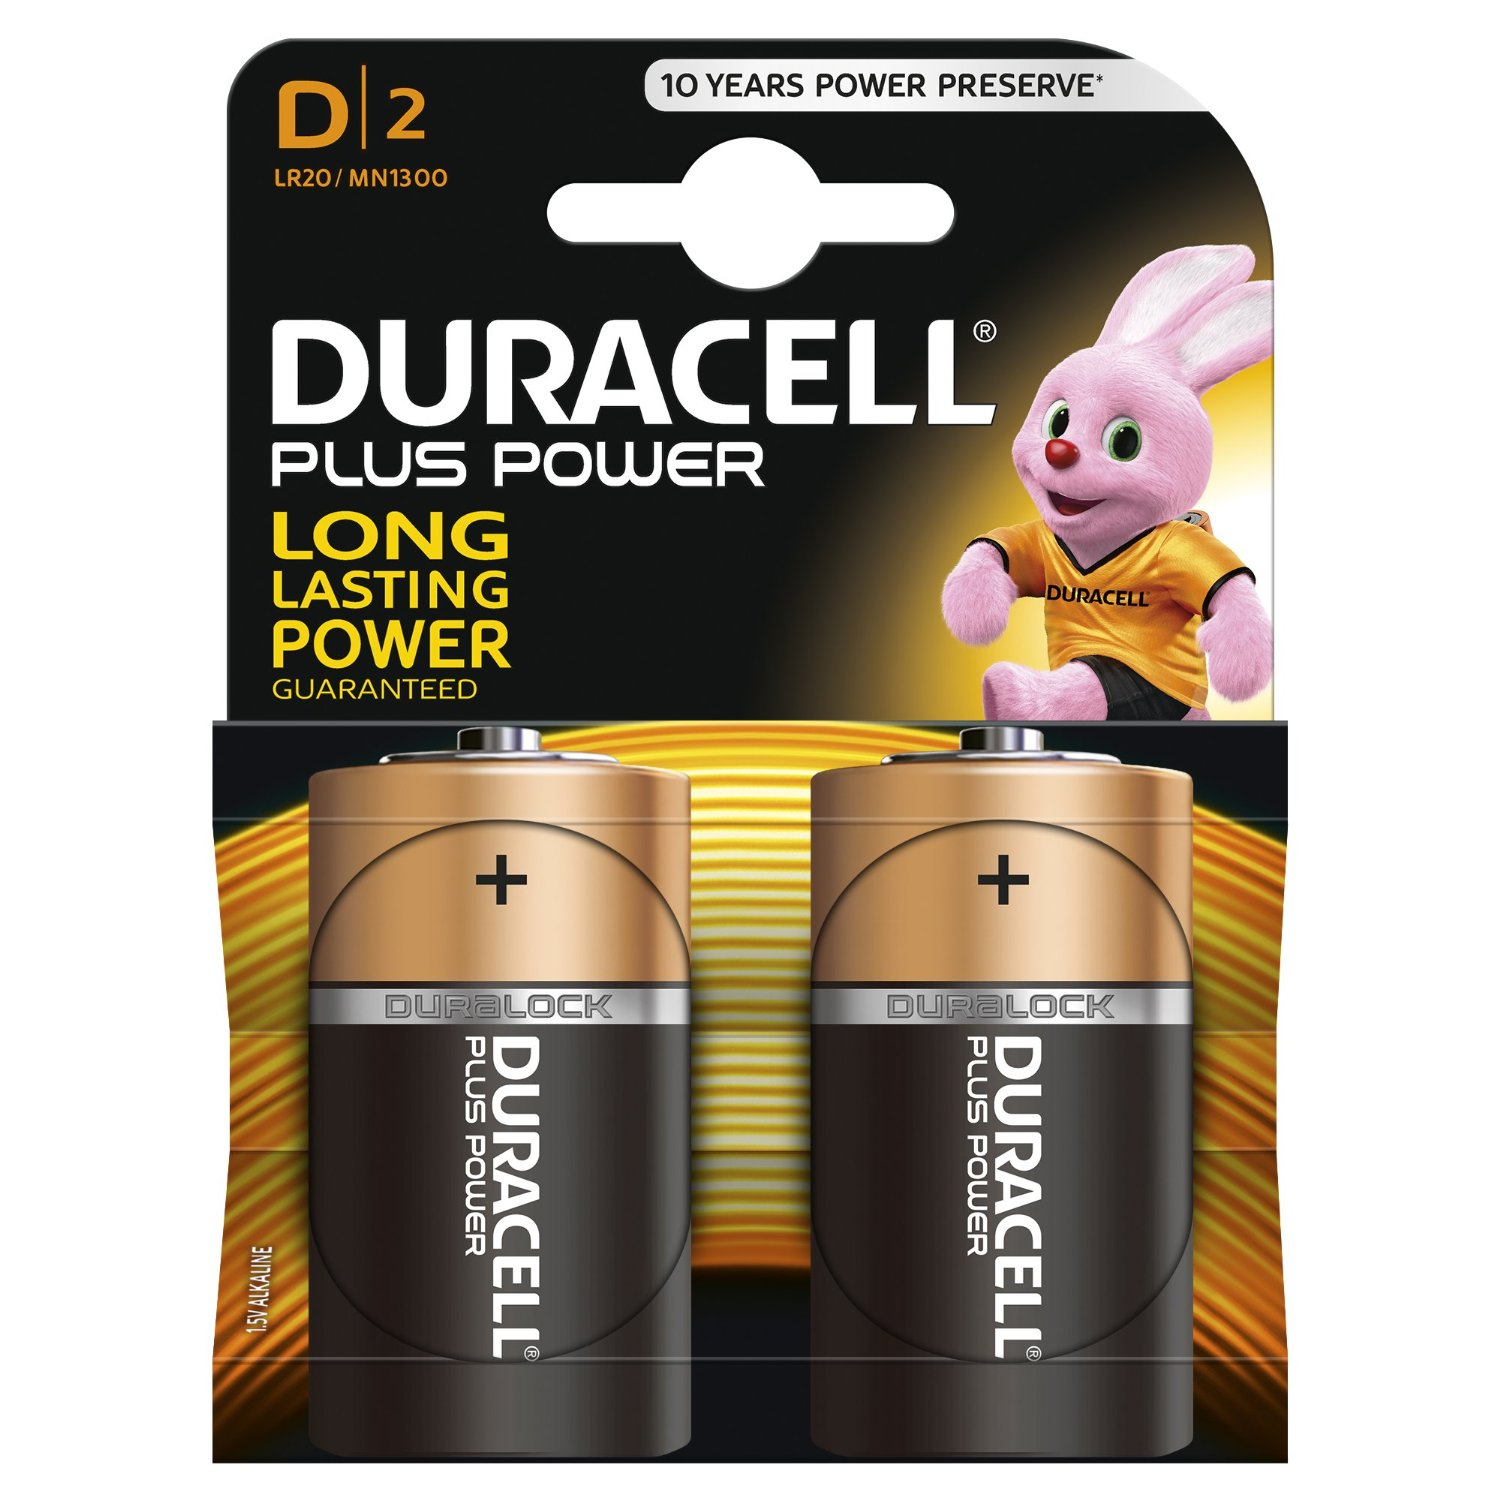 Afbeelding van Duracell 9v Plus Power Duralock D2 LR20/ MN1300